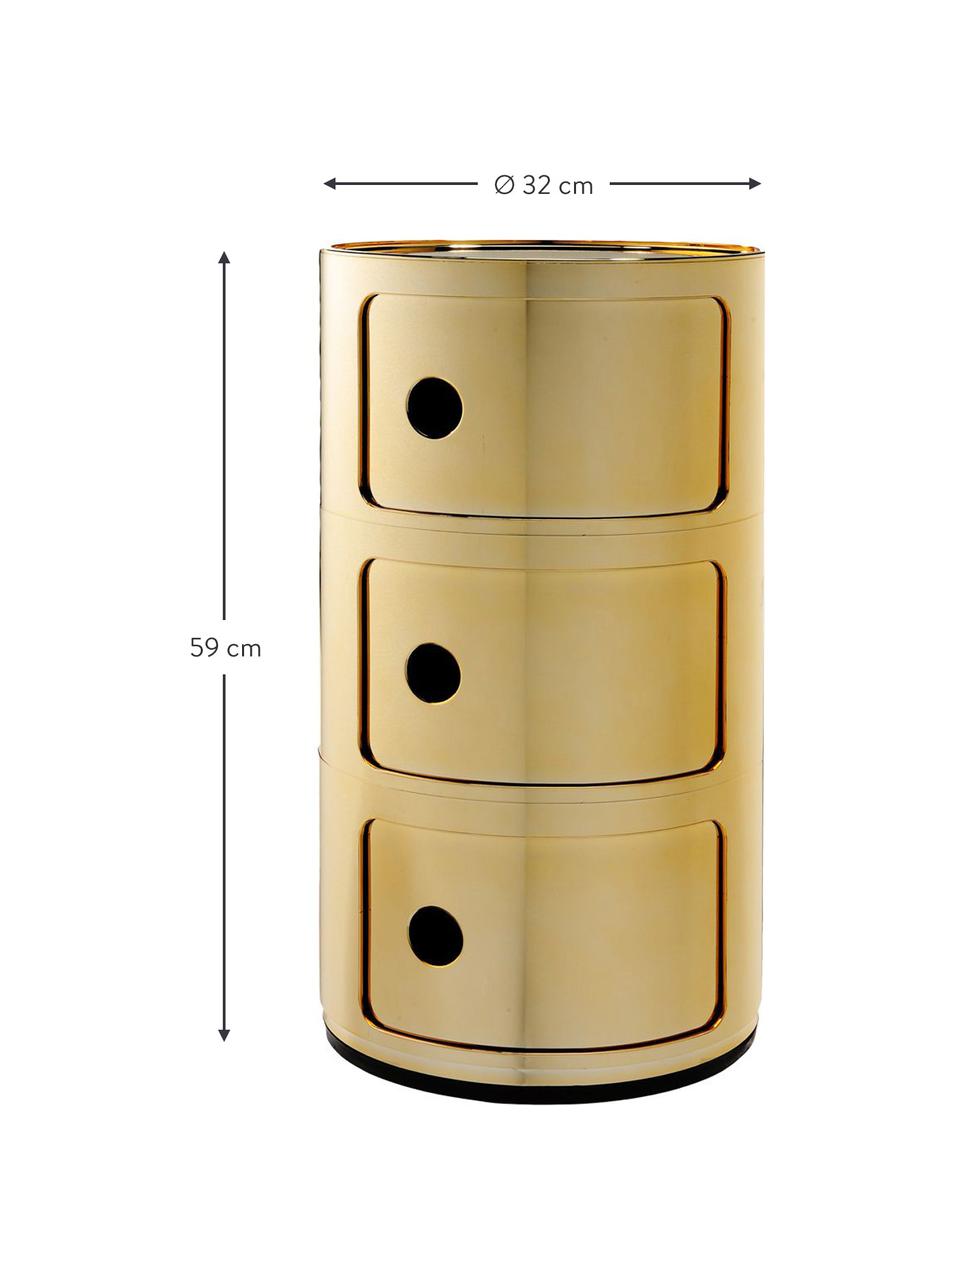 Design Container Componibili 3 Modules in Gold, Kunststoff (ABS), lackiert, Greenguard-zertifiziert, Gold-Metallic, Ø 32 x H 59 cm